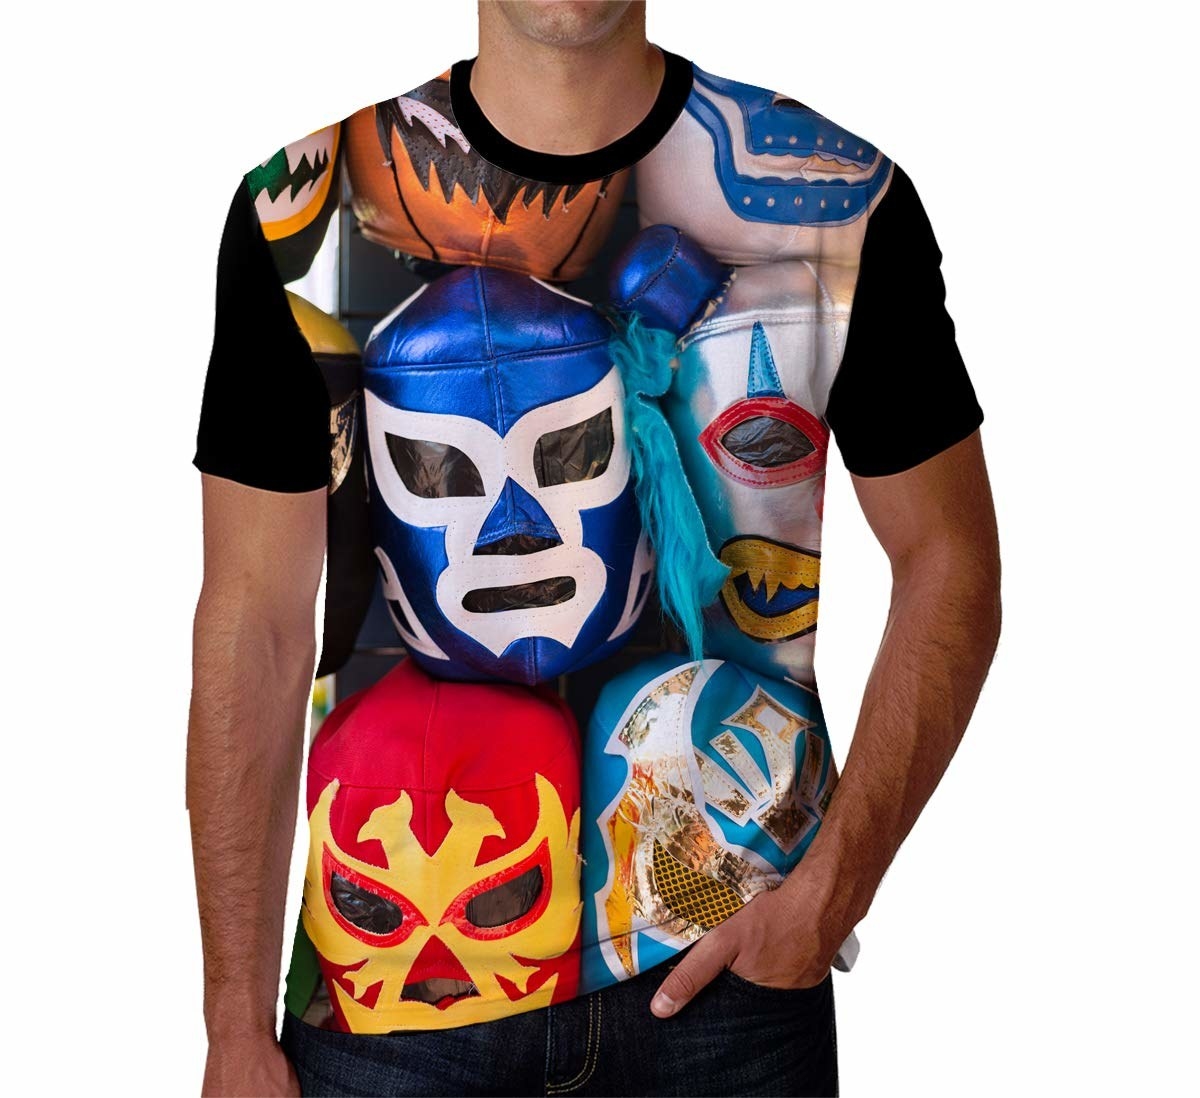 Playera de hombre con estampado de máscaras de lucha libre mexicana